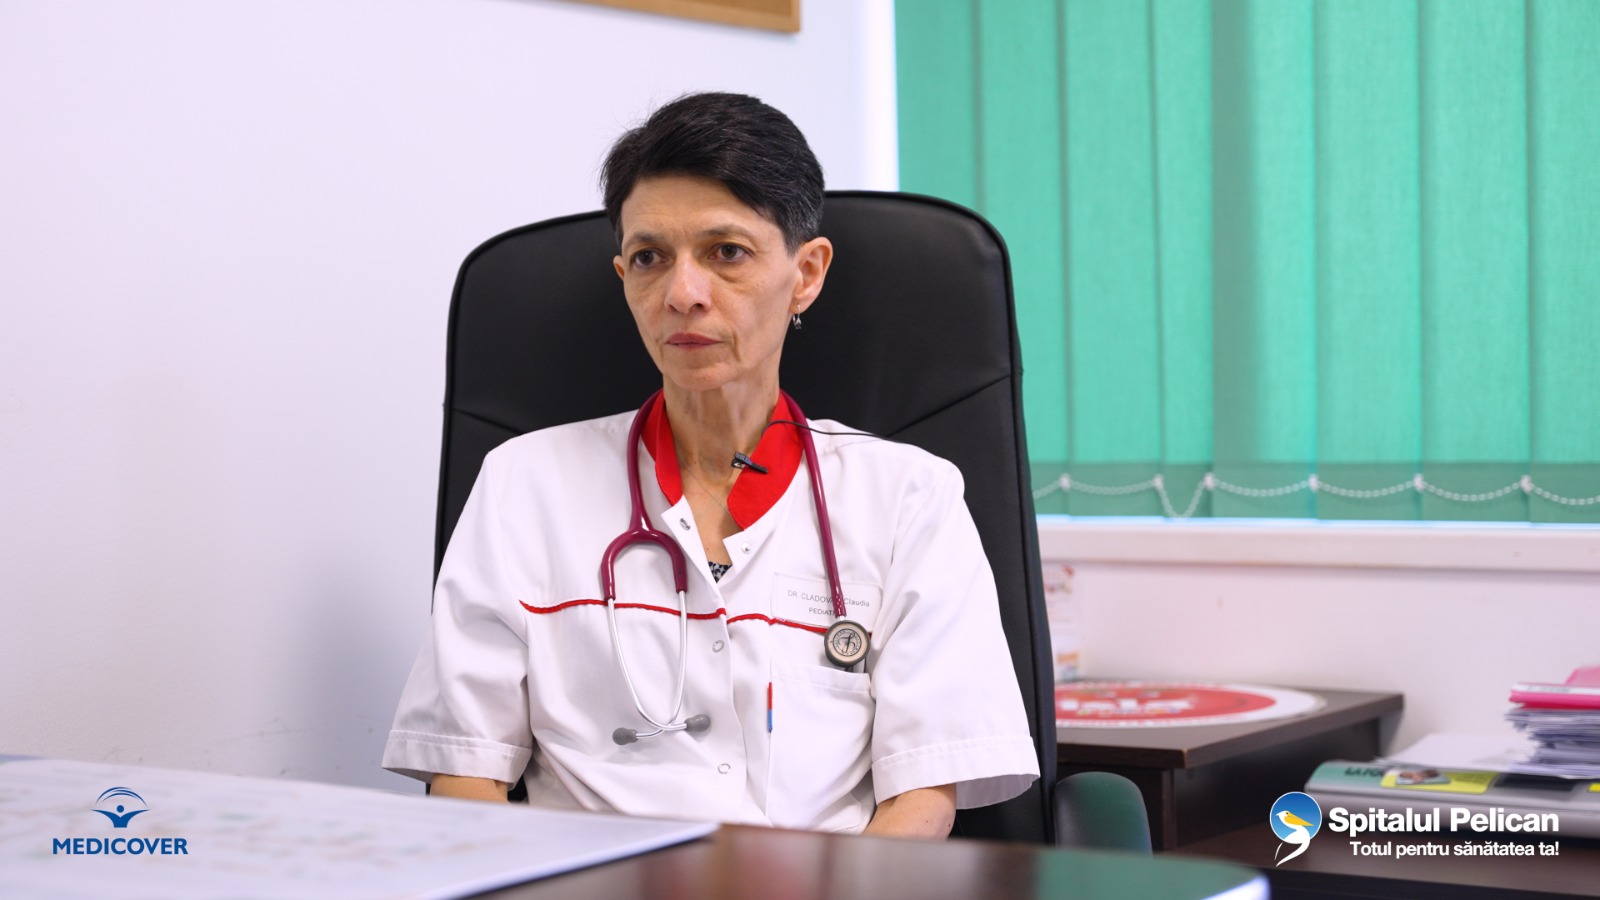 PEDIATRIE: Copiii infectati cu SARS-CoV-2 beneficiaza de spitalizare gratuita la Spitalul Pelican